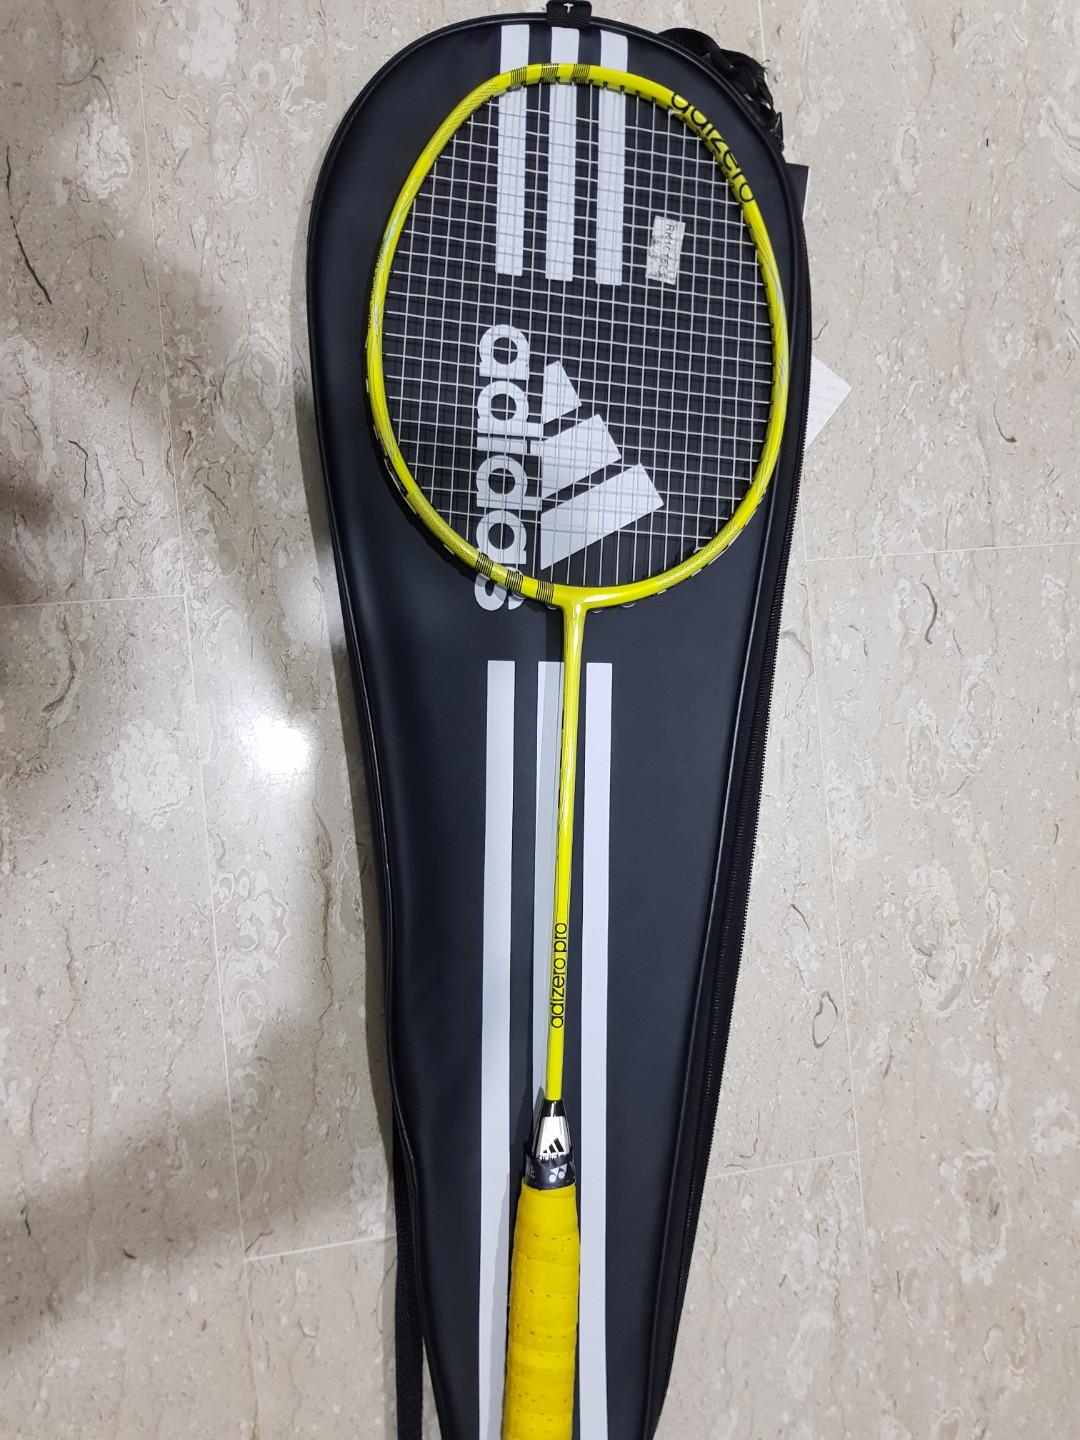 adidas adizero pro badminton